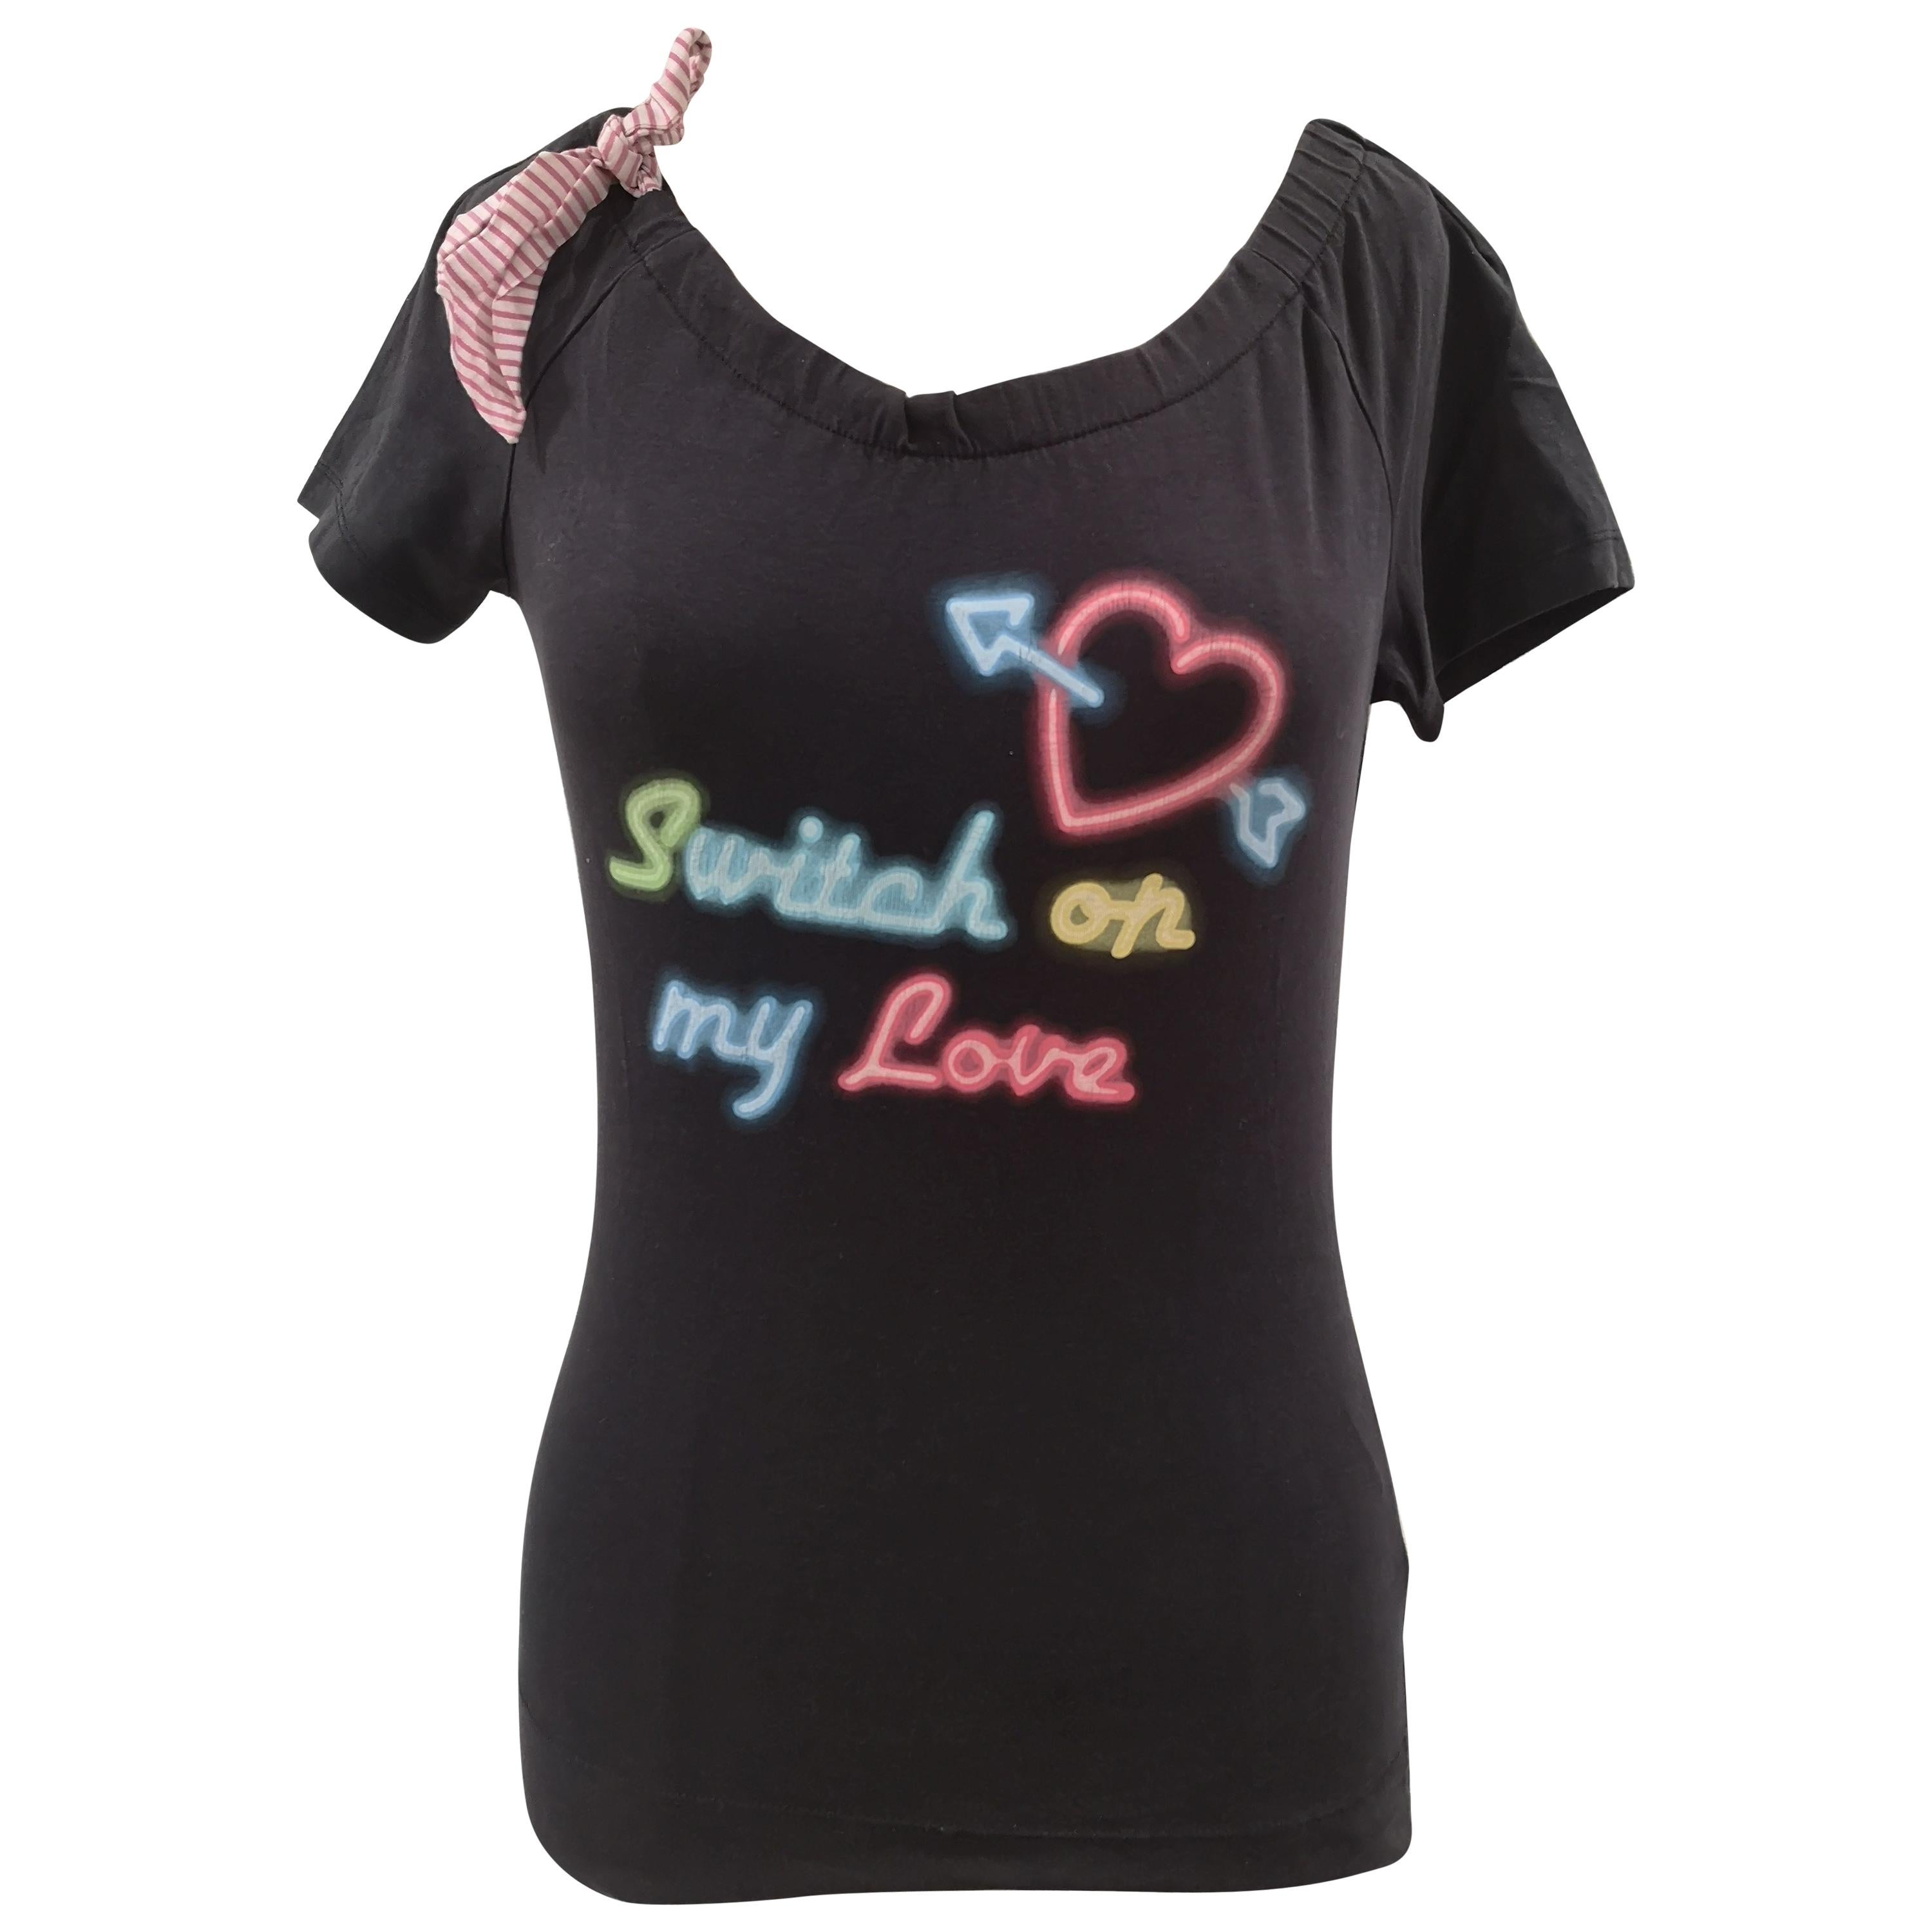 Moschino Switch on my love t-shirt